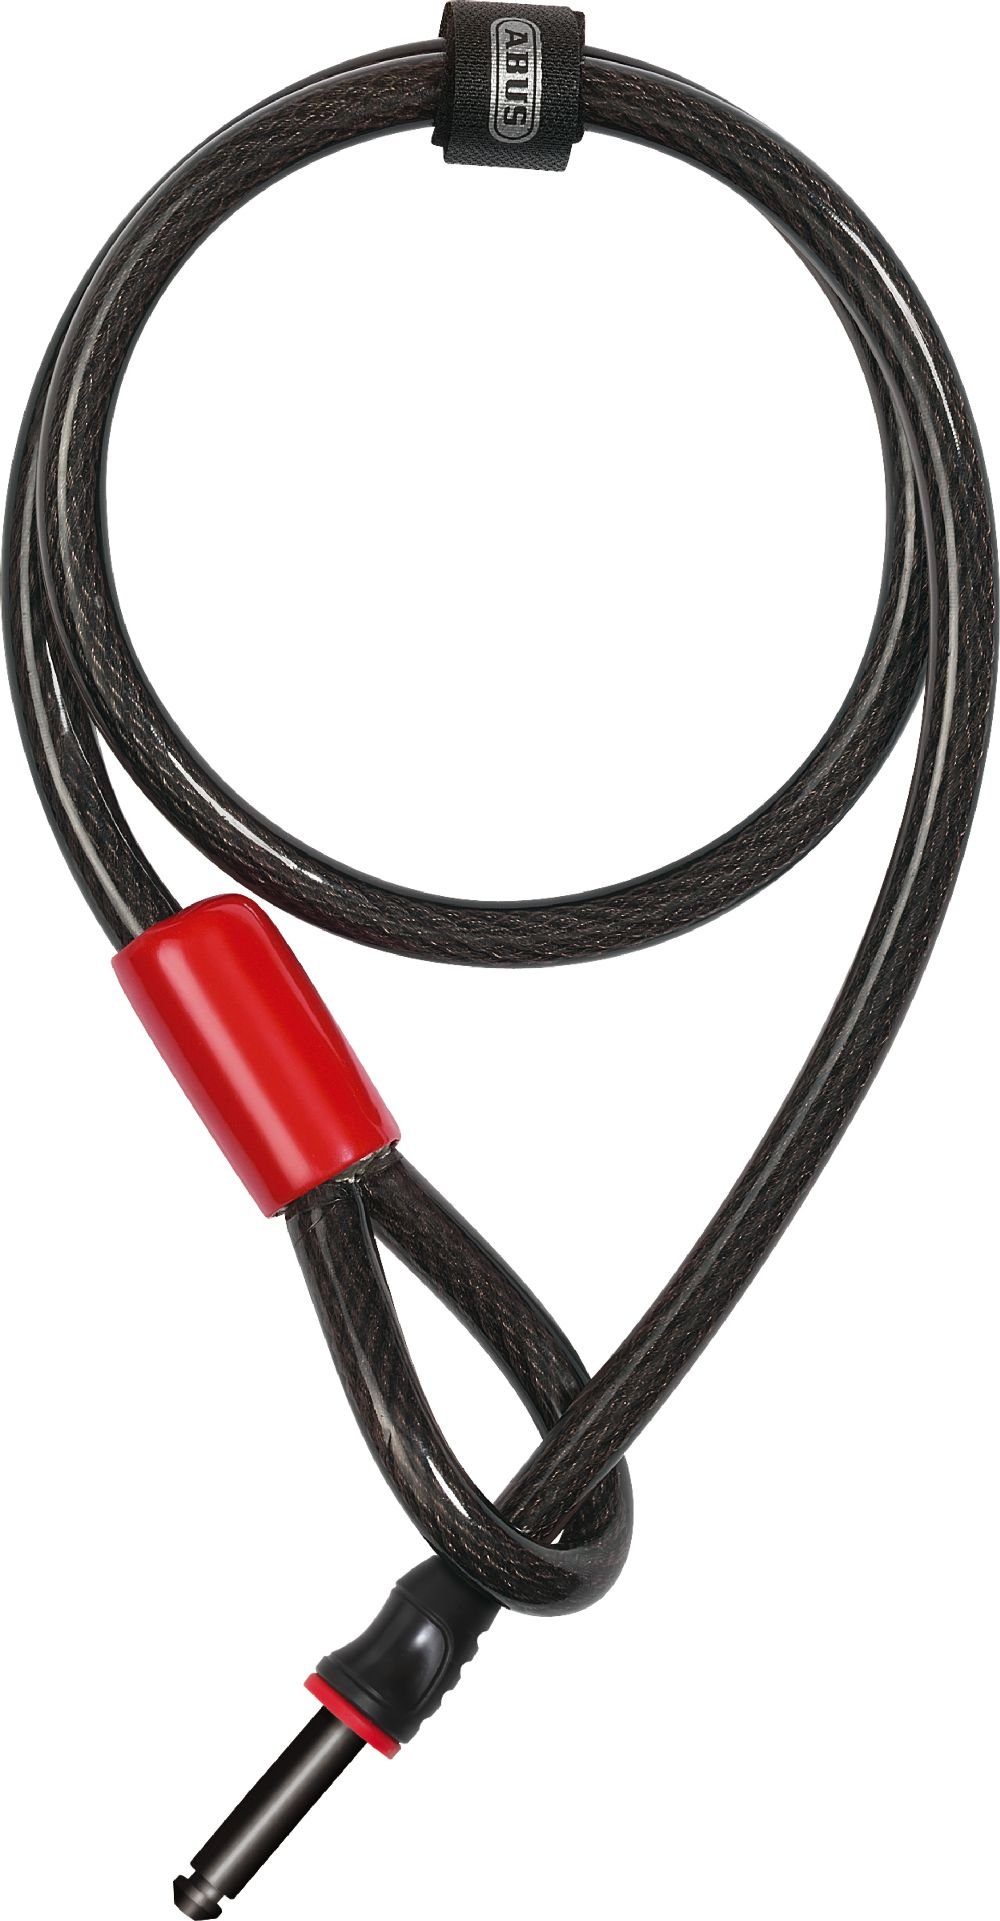 Adaptor Kabelschloss Cable ABUS